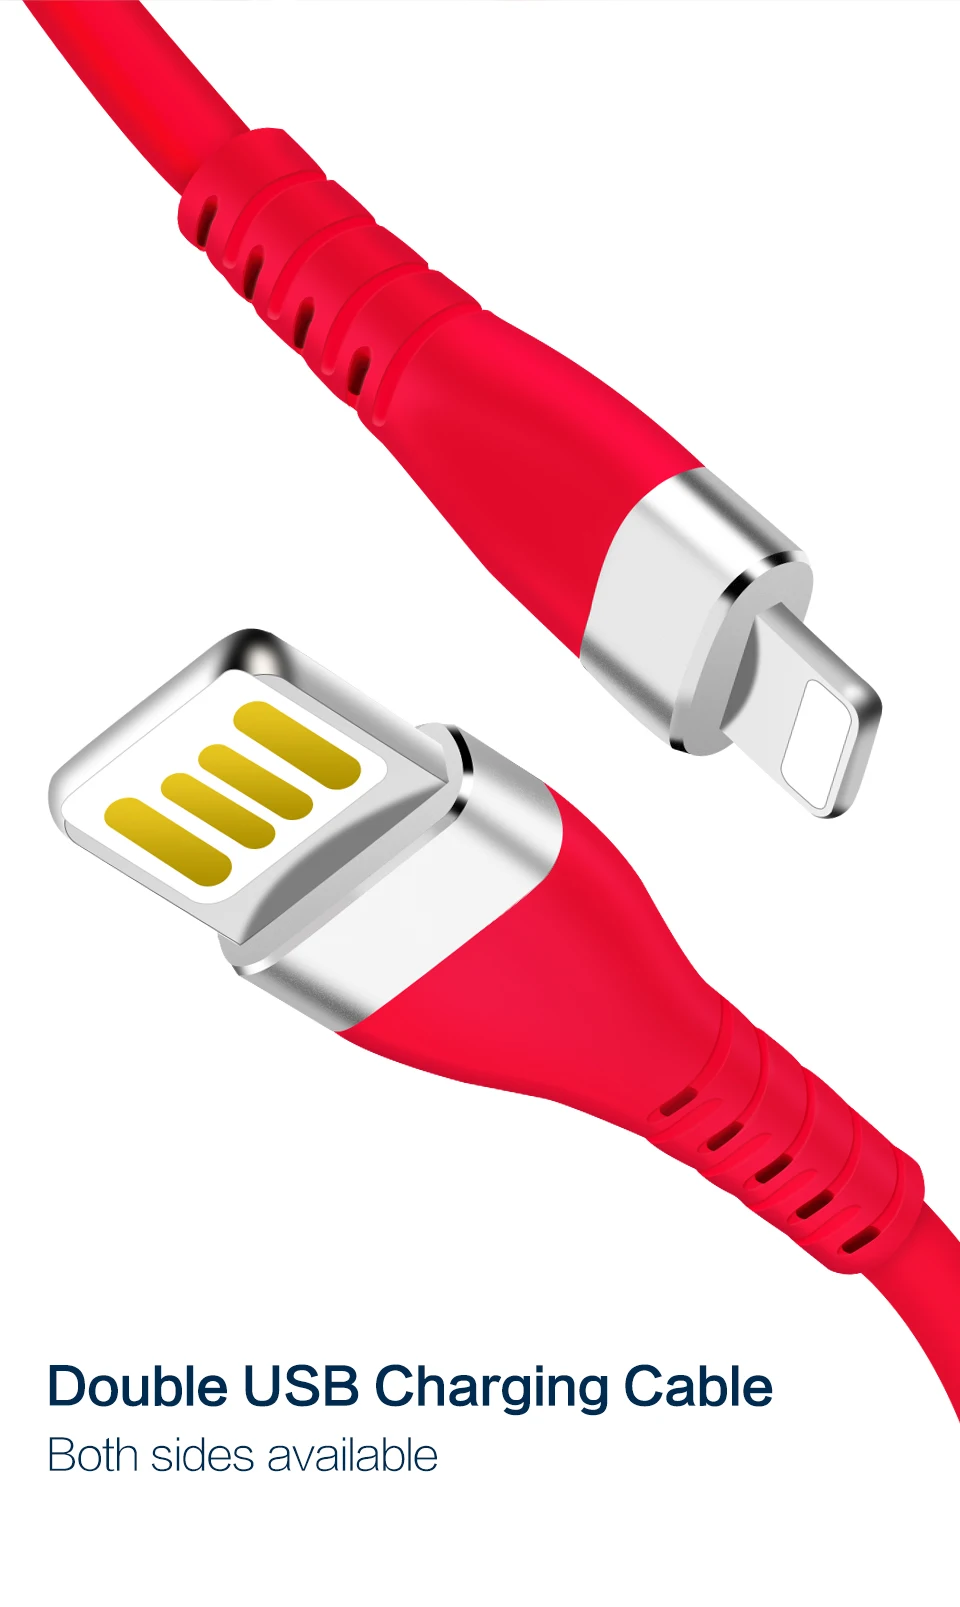 Power4 двухсторонние USB кабели для Lightning Кабель USB зарядное устройство для iPhone x/xr/xs/7/5/4S mfi i телефонный кабель для зарядного устройства для Apple